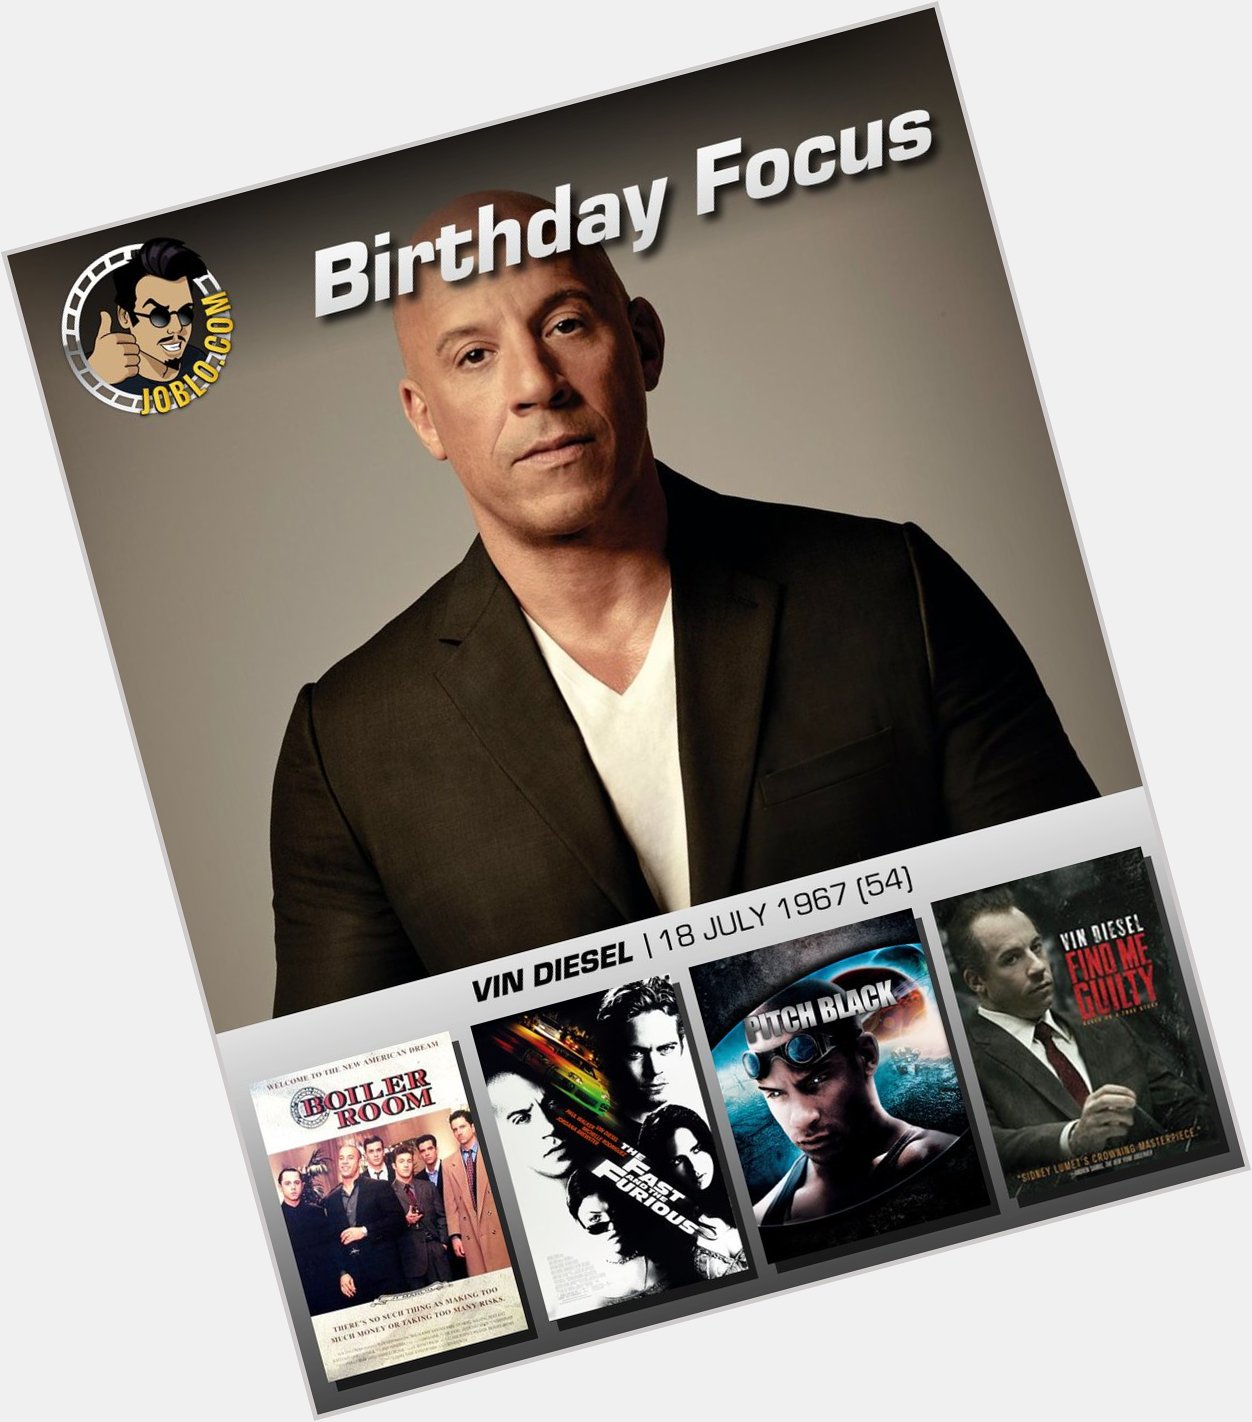 Wishing Vin Diesel a very happy 54th birthday! 